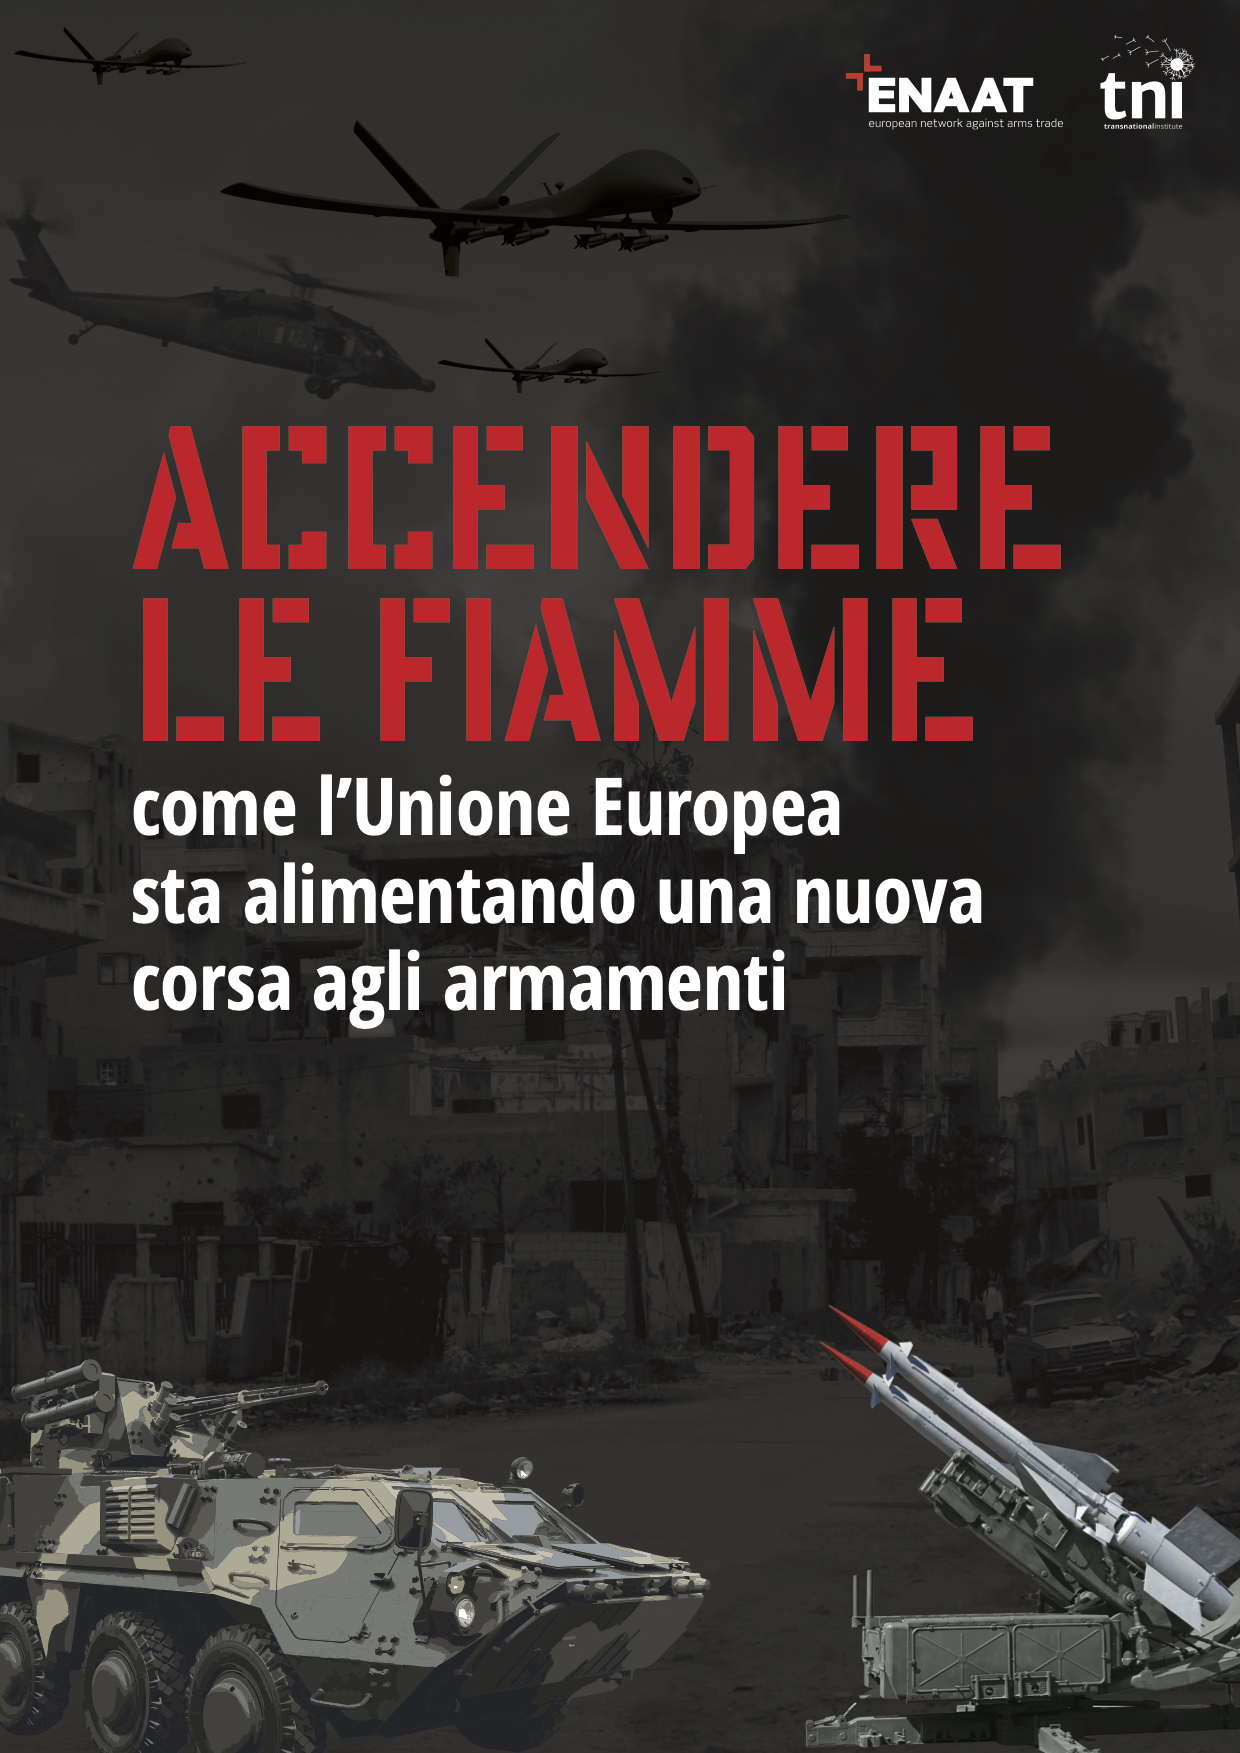 Accendere-Fiamme-Cover-ENAAT-Ita